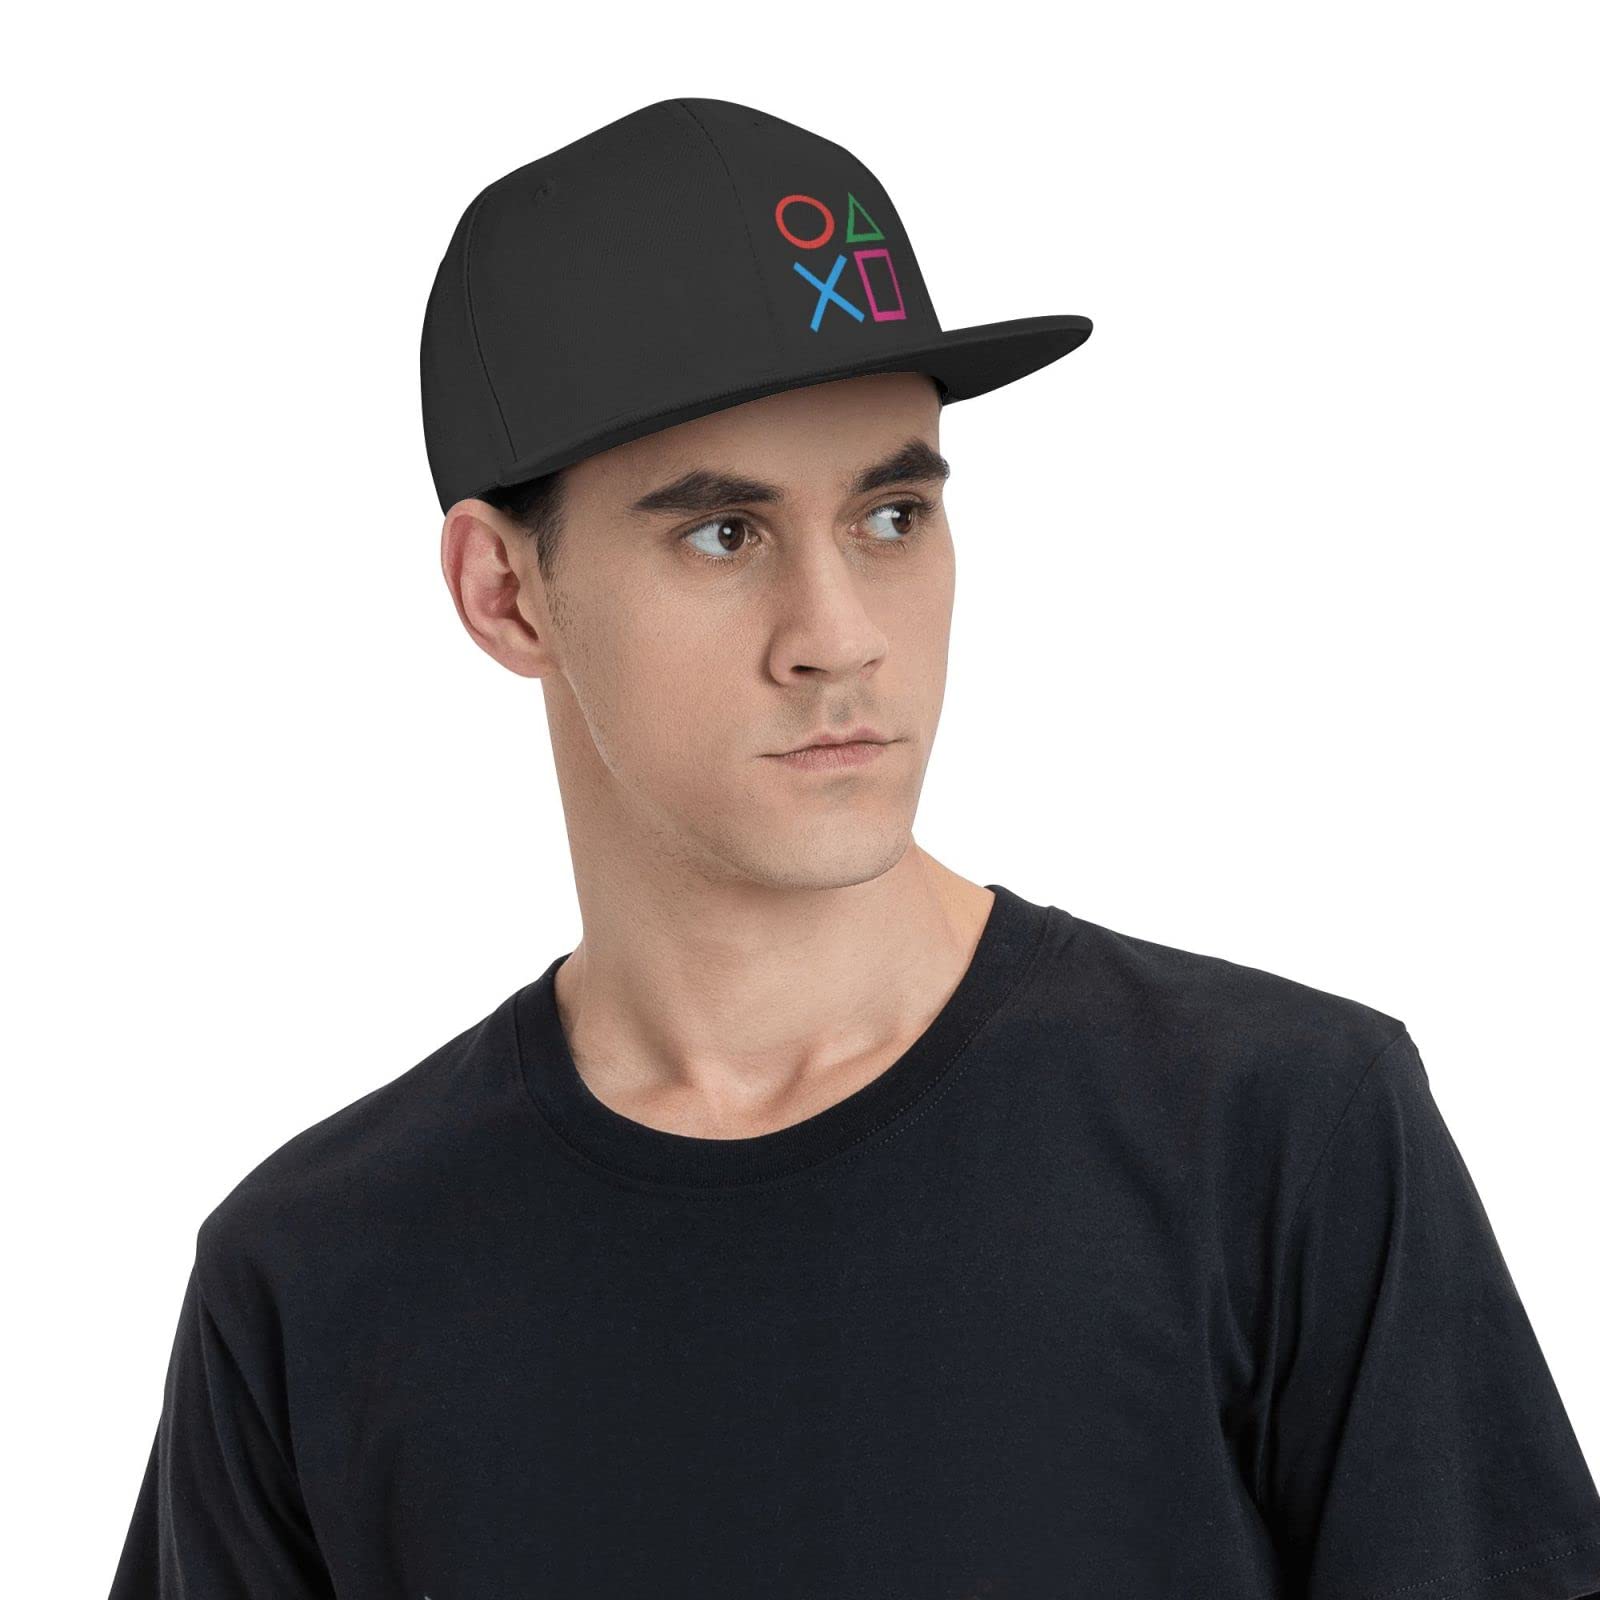 swqfzki Gamer Hat Snapback Flat Bill Baseball Cap Men's Adjustable Gamers Gift Trucker Hats Black - amzGamess